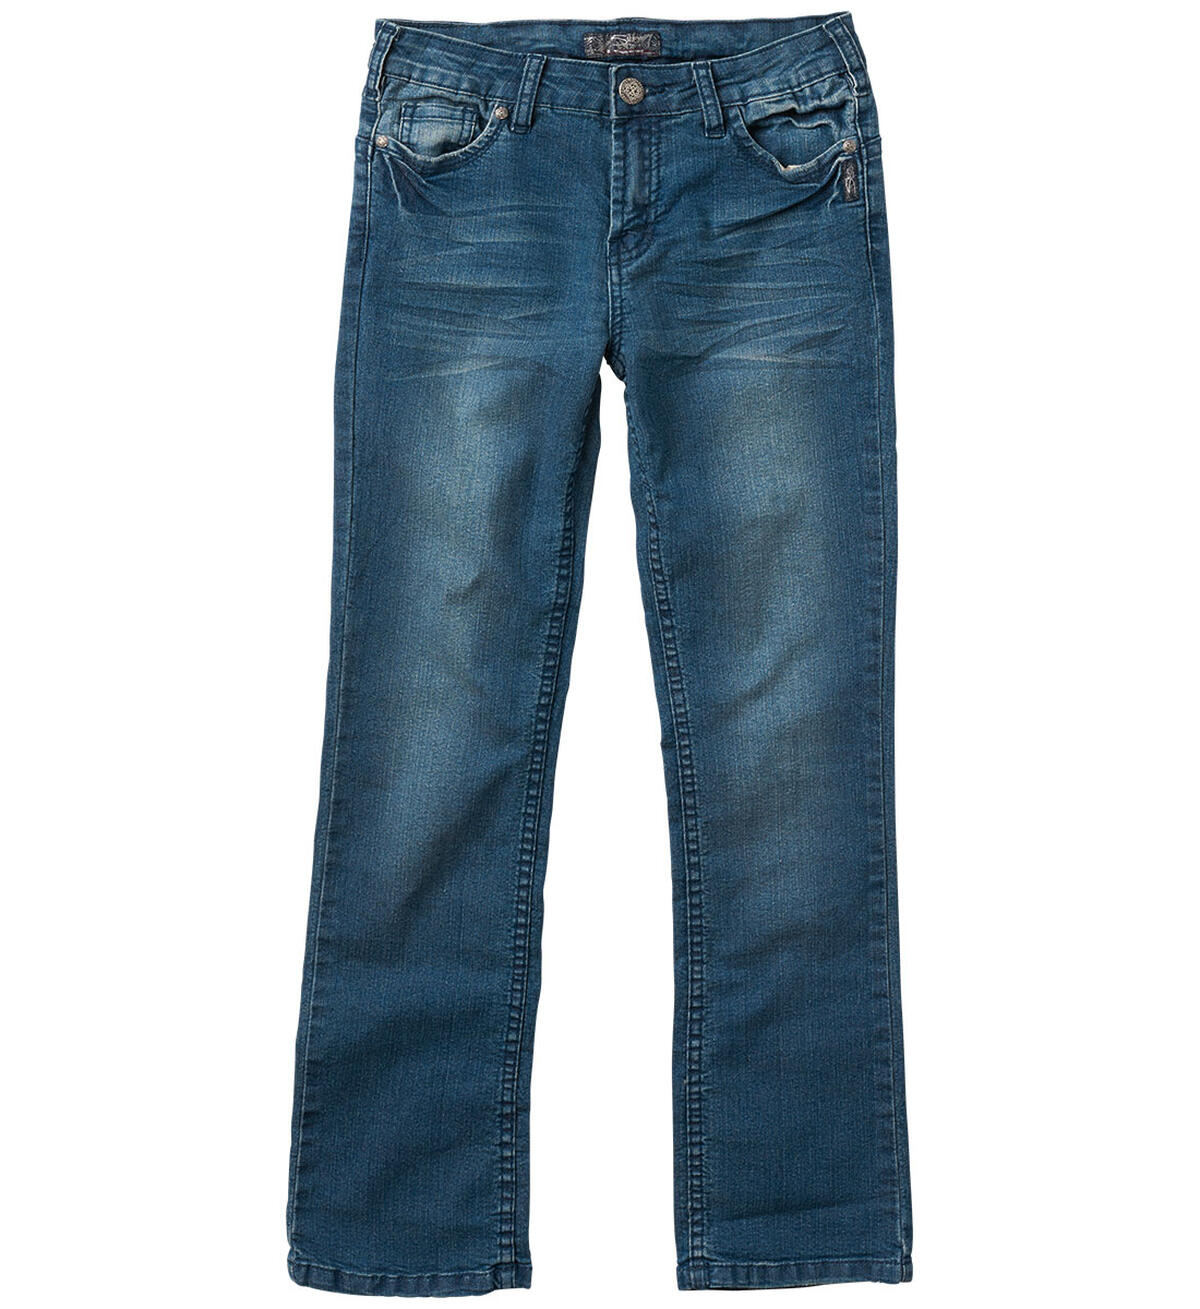 Tammy Bootcut Jeans in Dark Wash (4-7), , hi-res image number 0